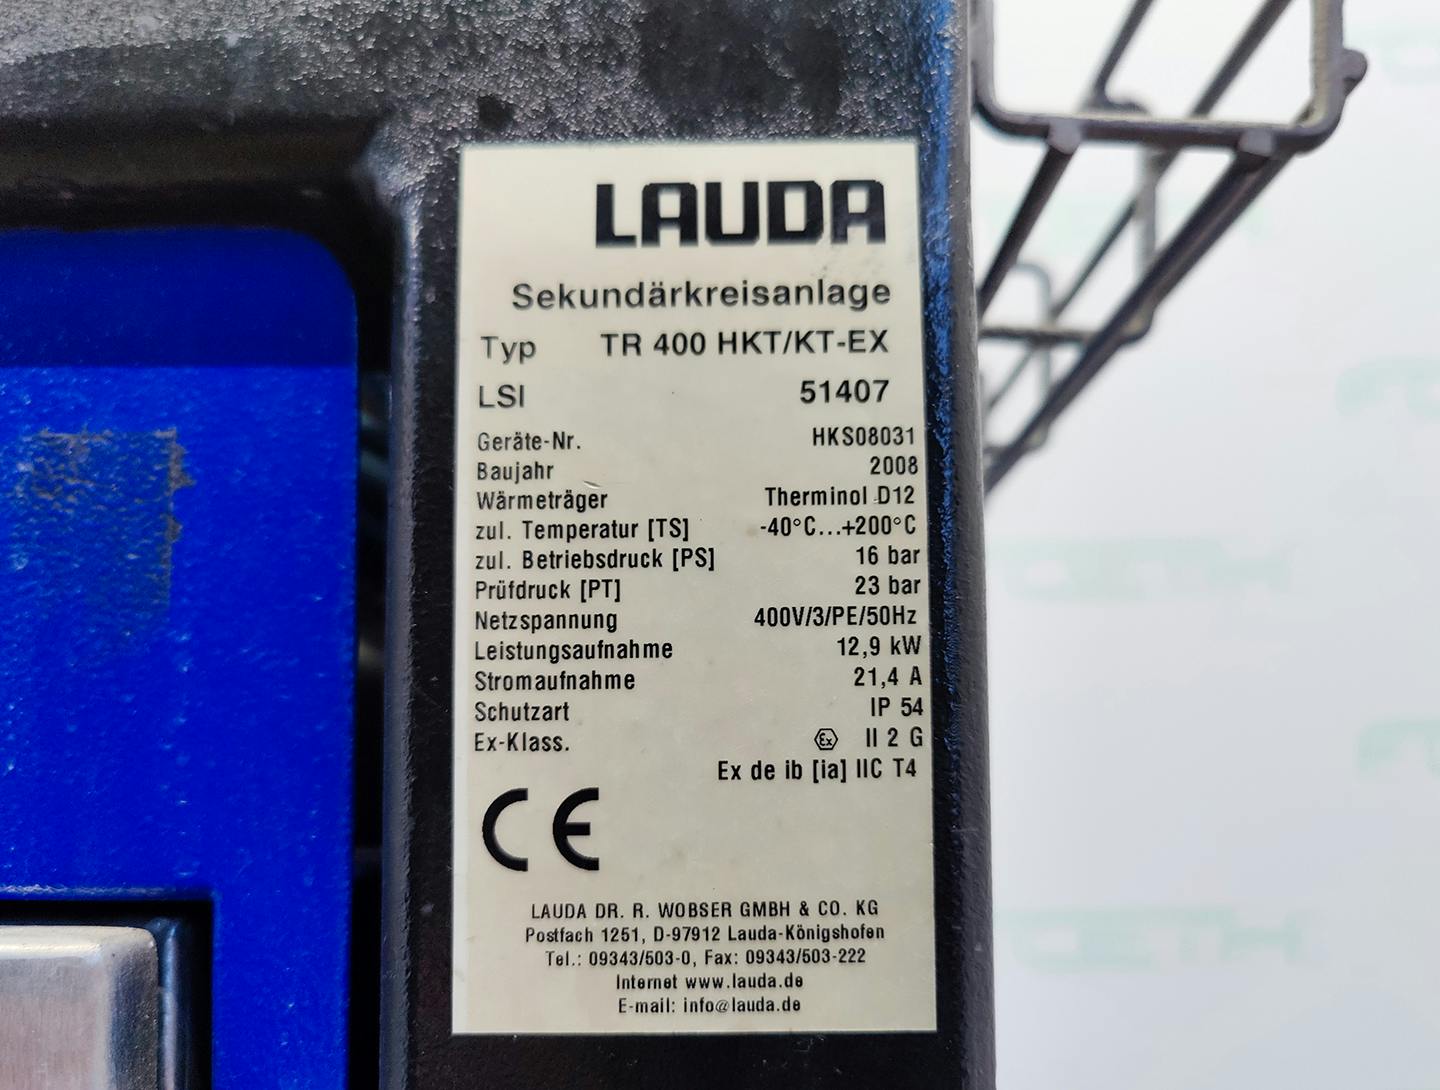 Lauda TR400 HKT/K-EX "secondary circuit system" - Chladic recirkulacní - image 7